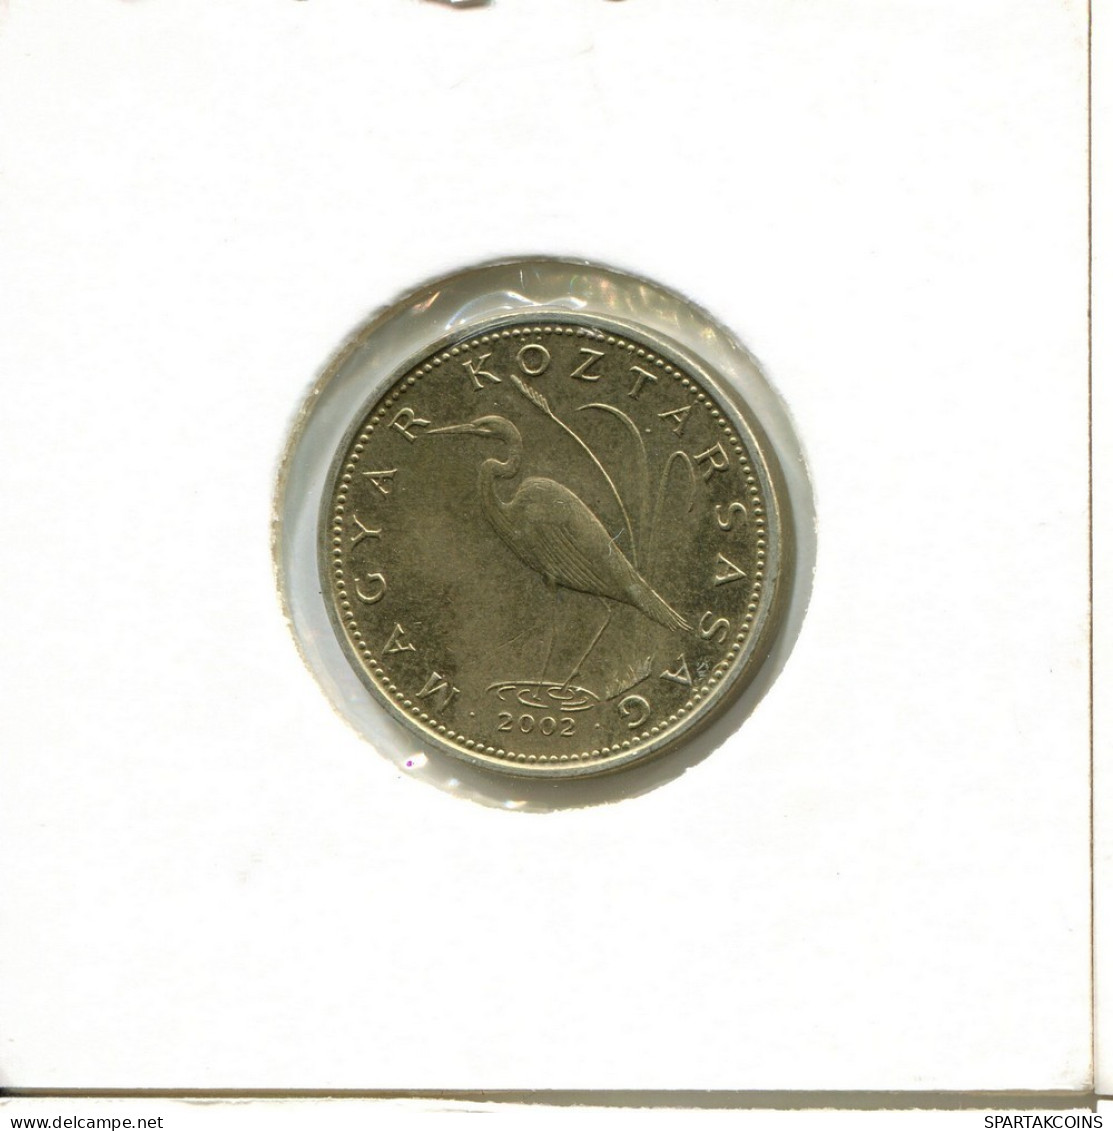 5 FORINT 2002 HUNGRÍA HUNGARY Moneda #AY515.E.A - Hungary